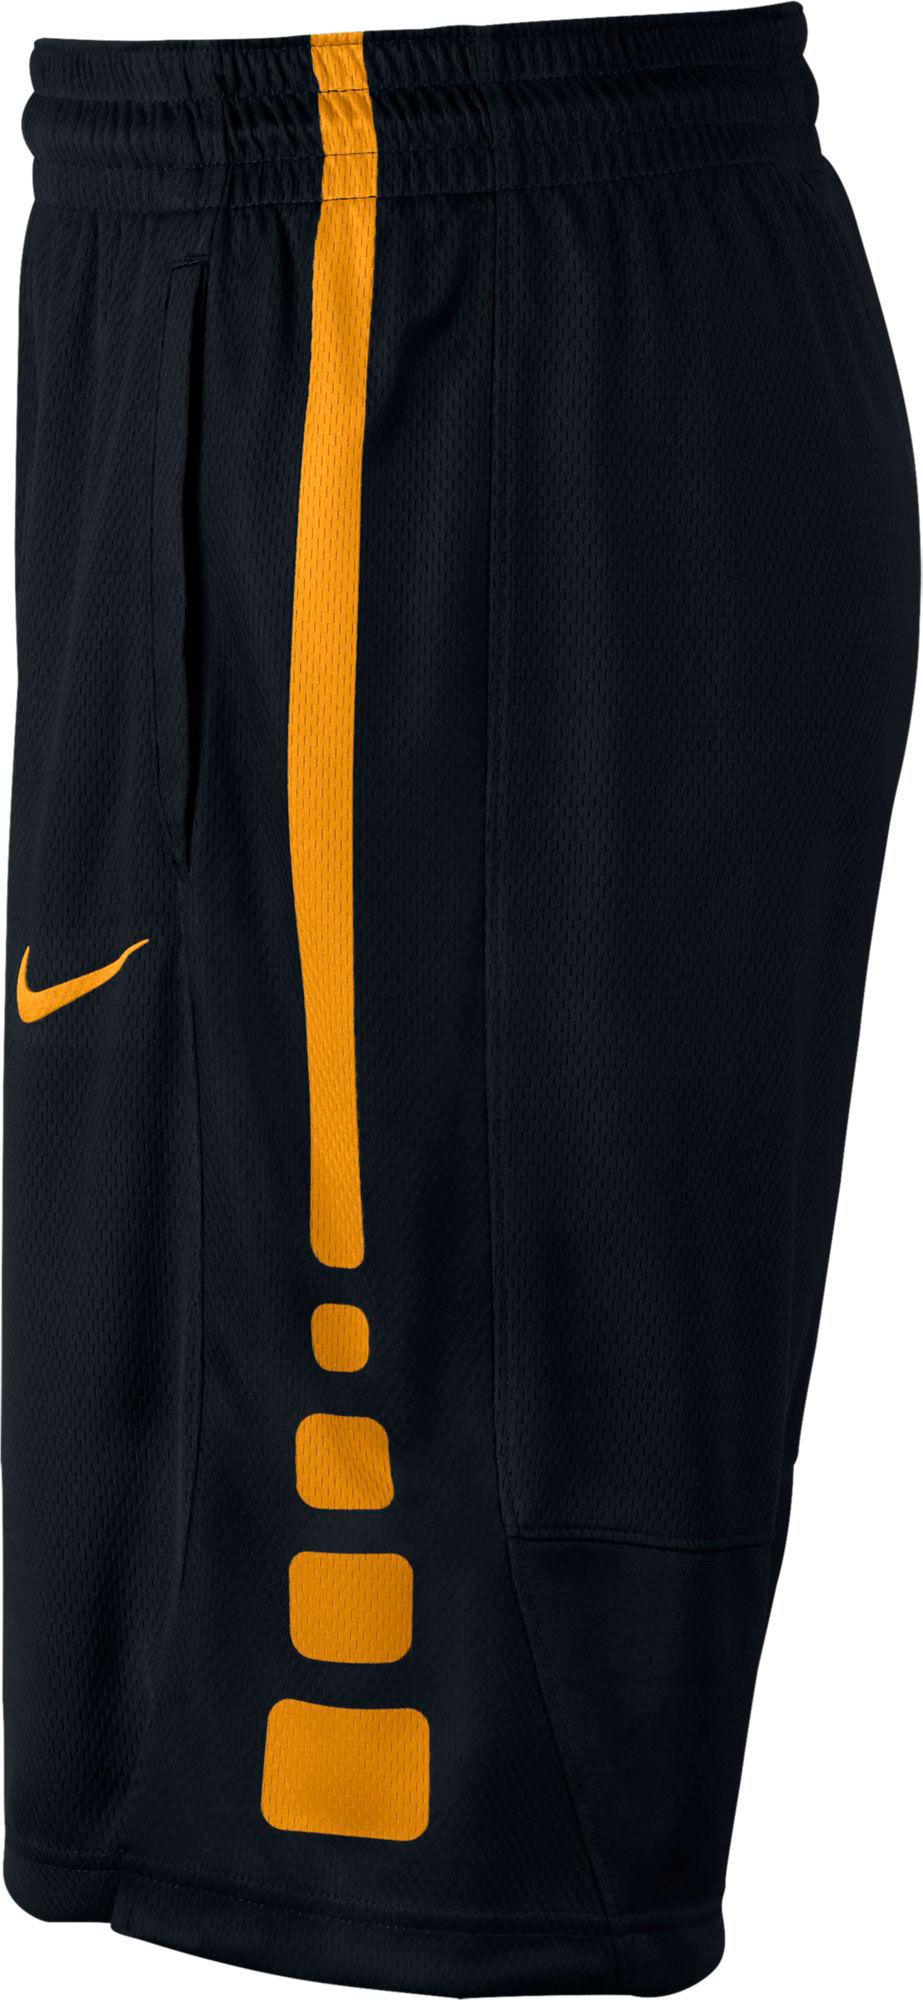 black and orange basketball shorts Off 56% - yaren.com